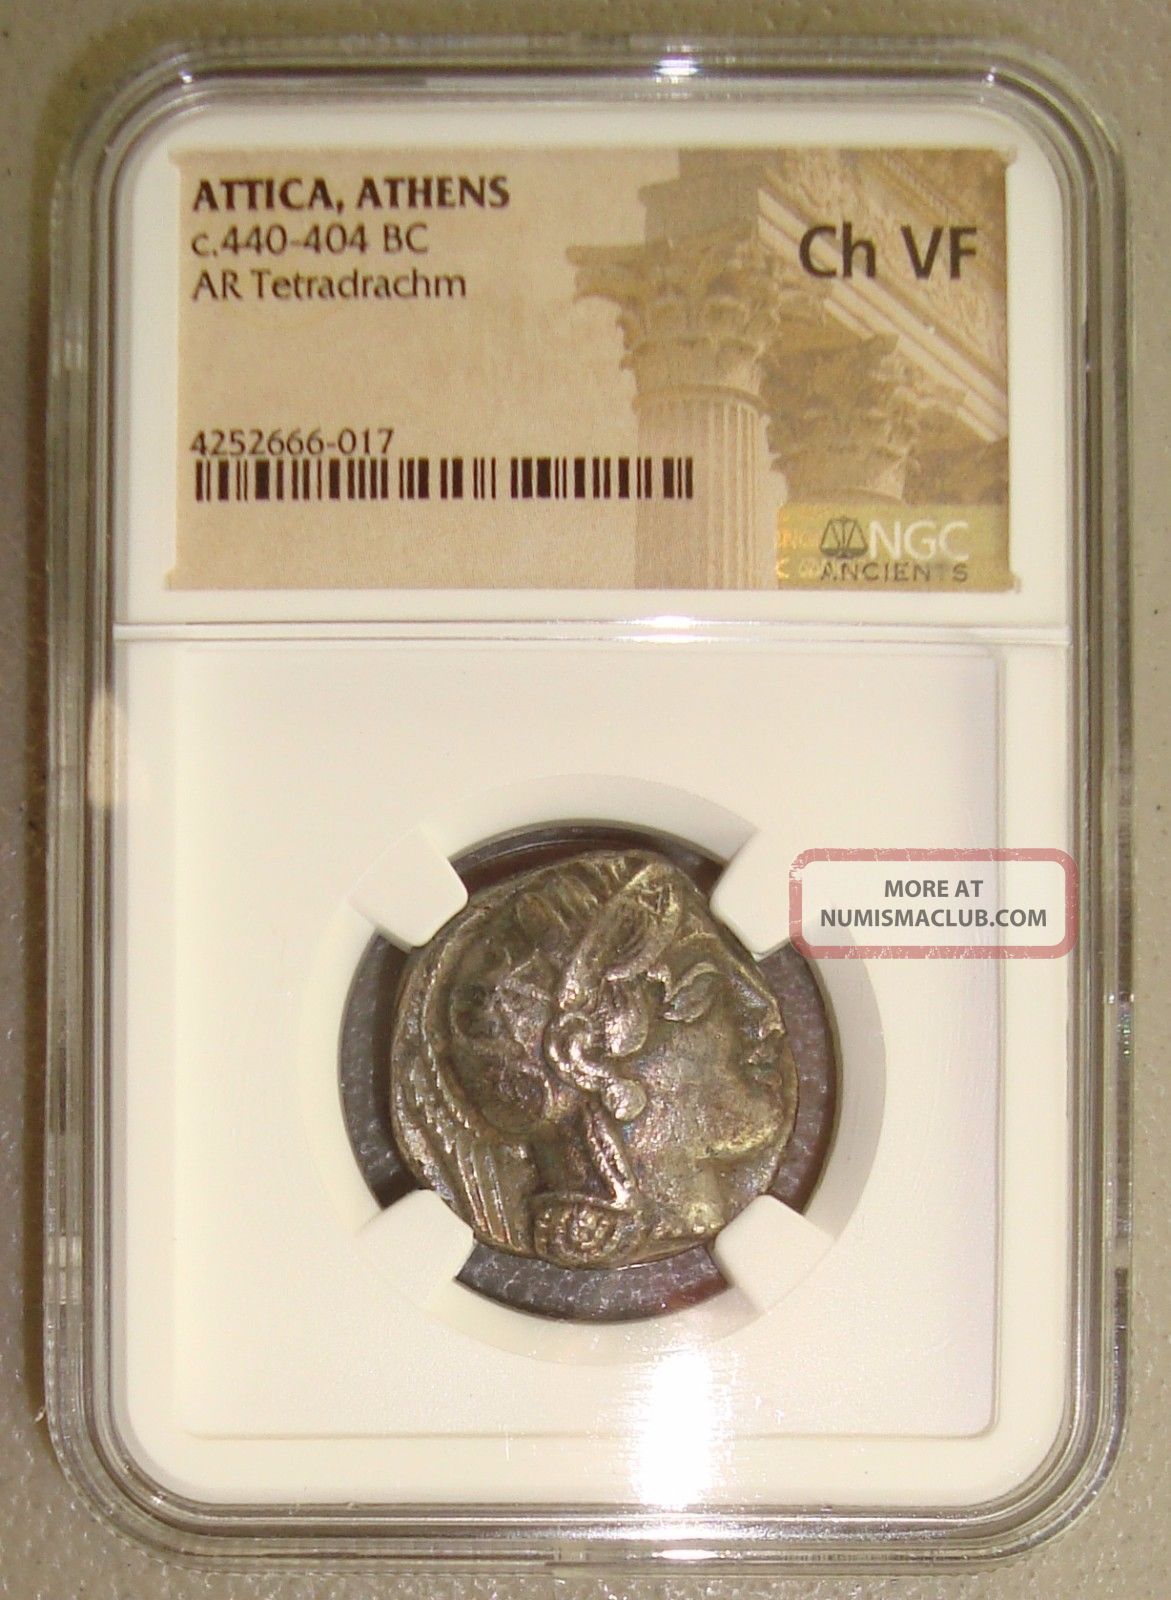 440 - 404 Bc Attica, Athens Athena Owl Ancient Greek Silver Tetradrachm